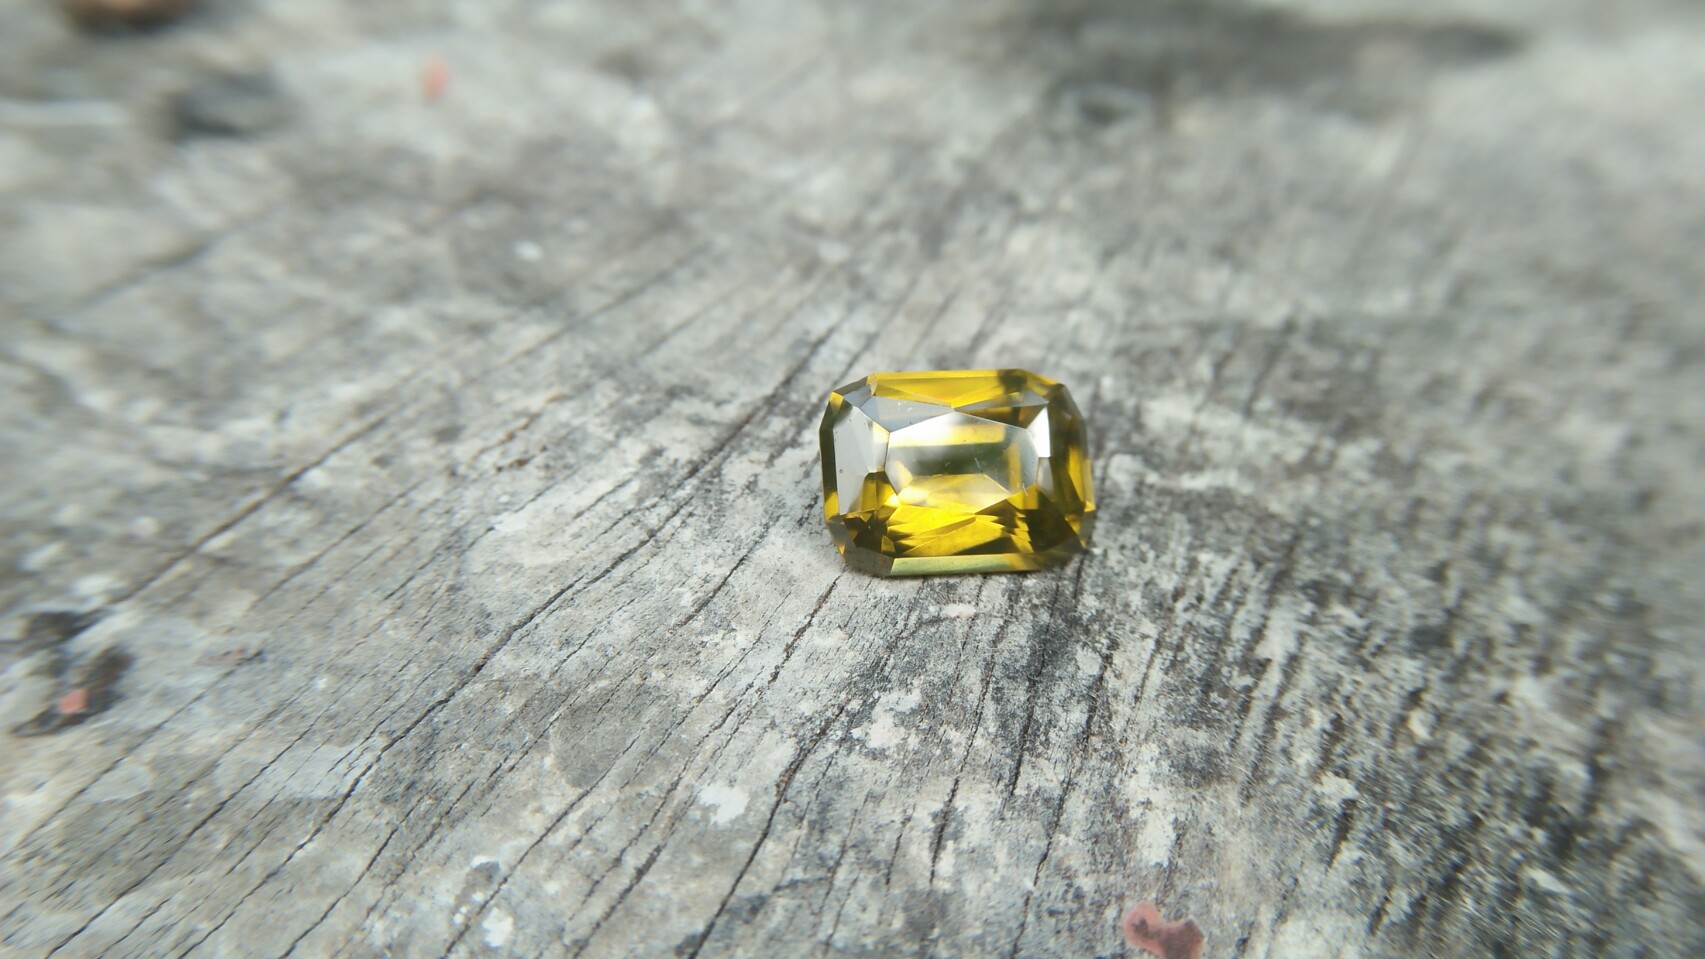 Ceylon Natural Melichrysos Weight : 6.85Cts Dimension : 12.1mm x 9.1mm x 5.9mm Colour : Greenish Yellow Treatment : Unheated/ Natural Clarity : Clean Mineral : Ratnapura Sri Lanka